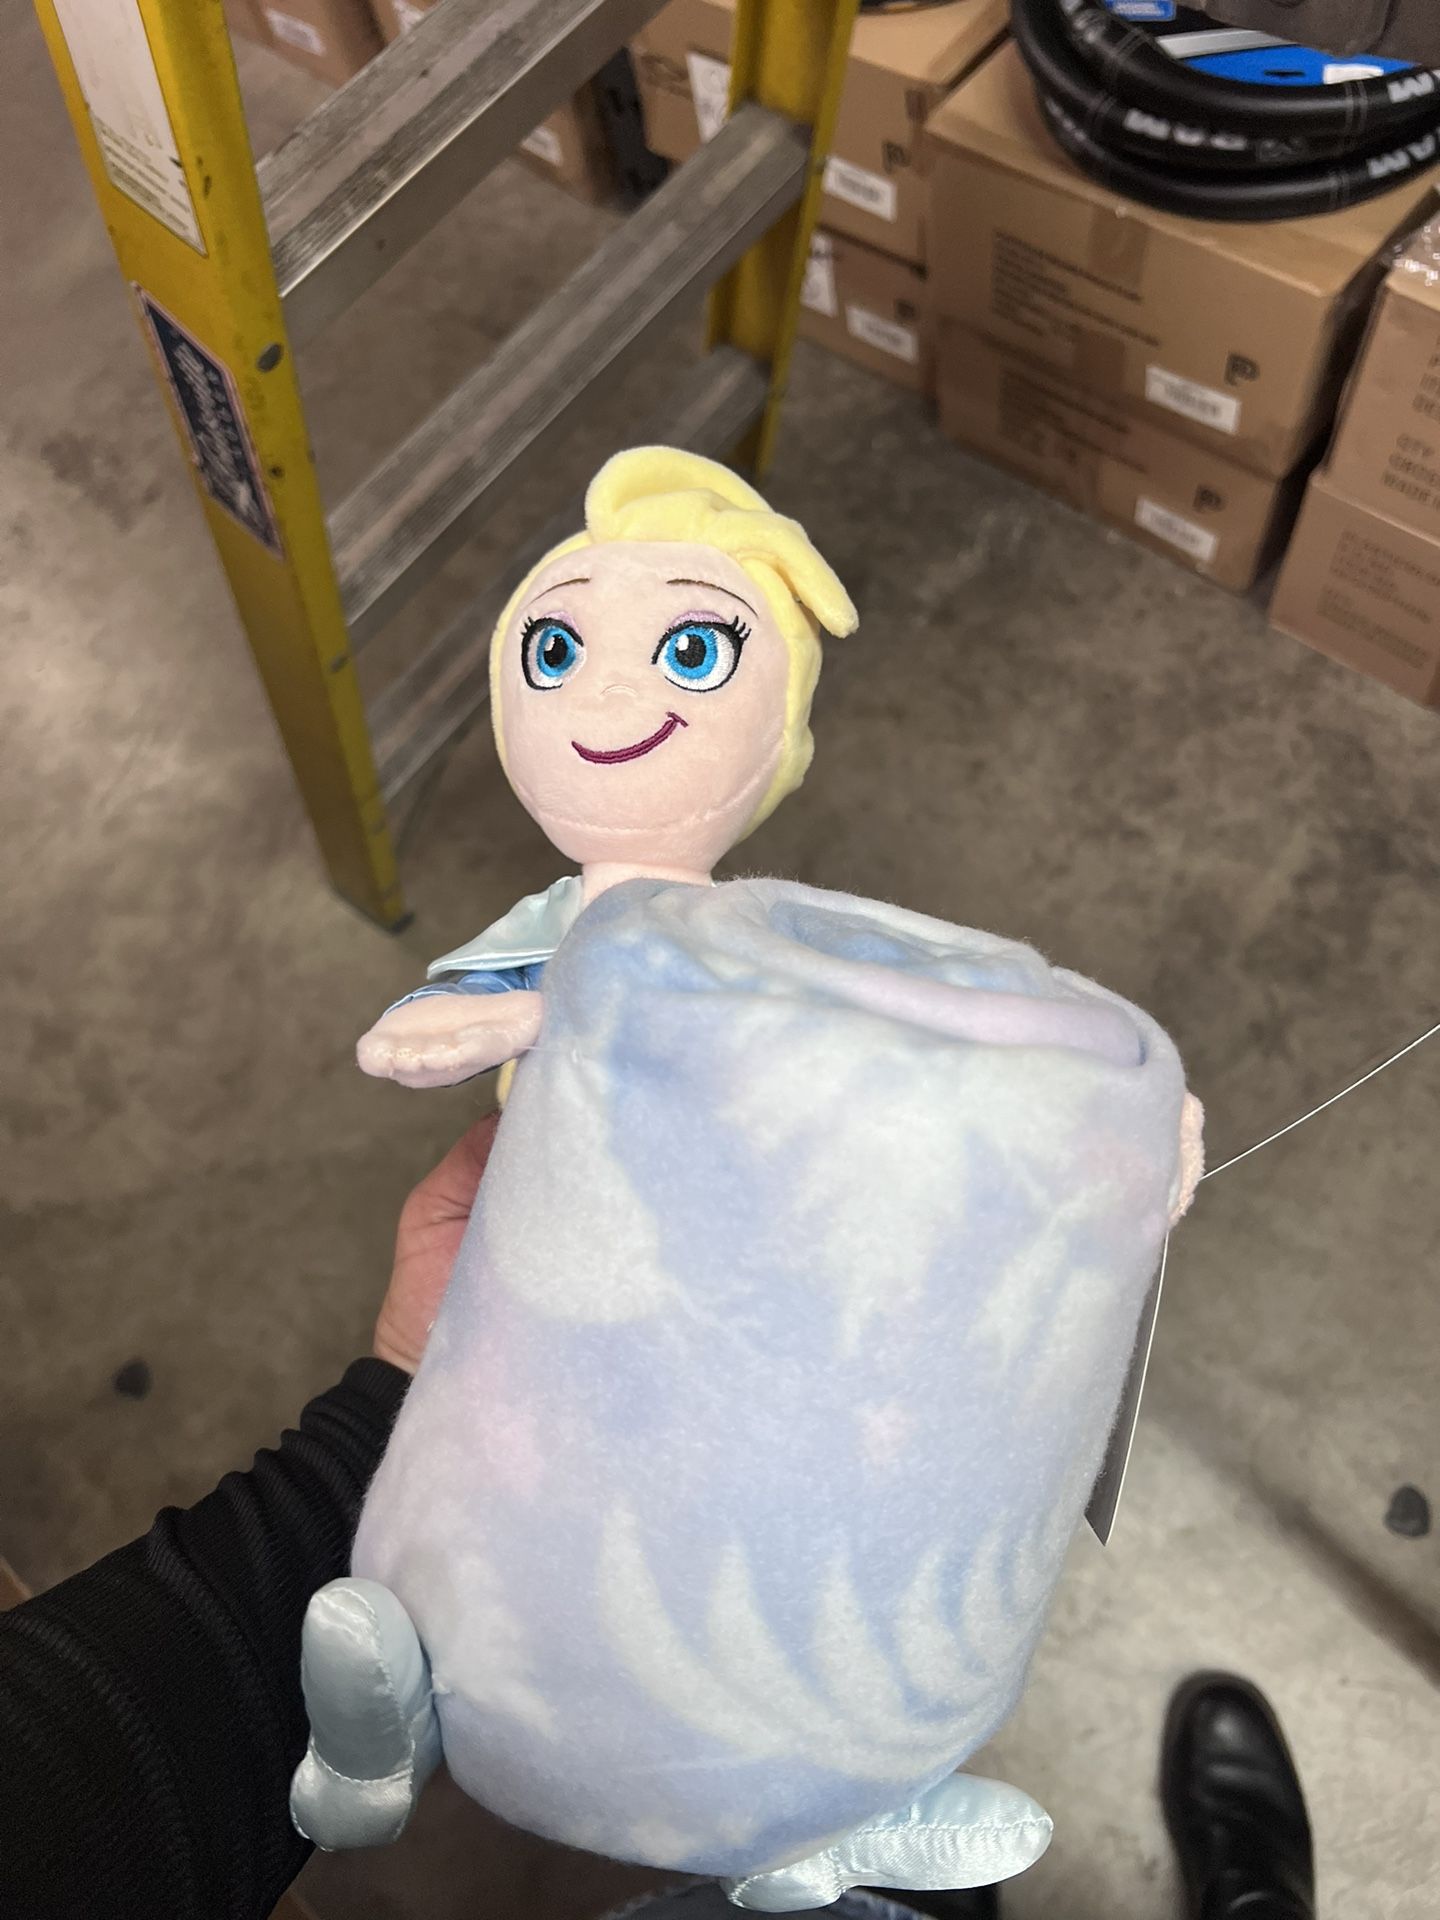 Brand New Elsa Frozen Character And Blanket